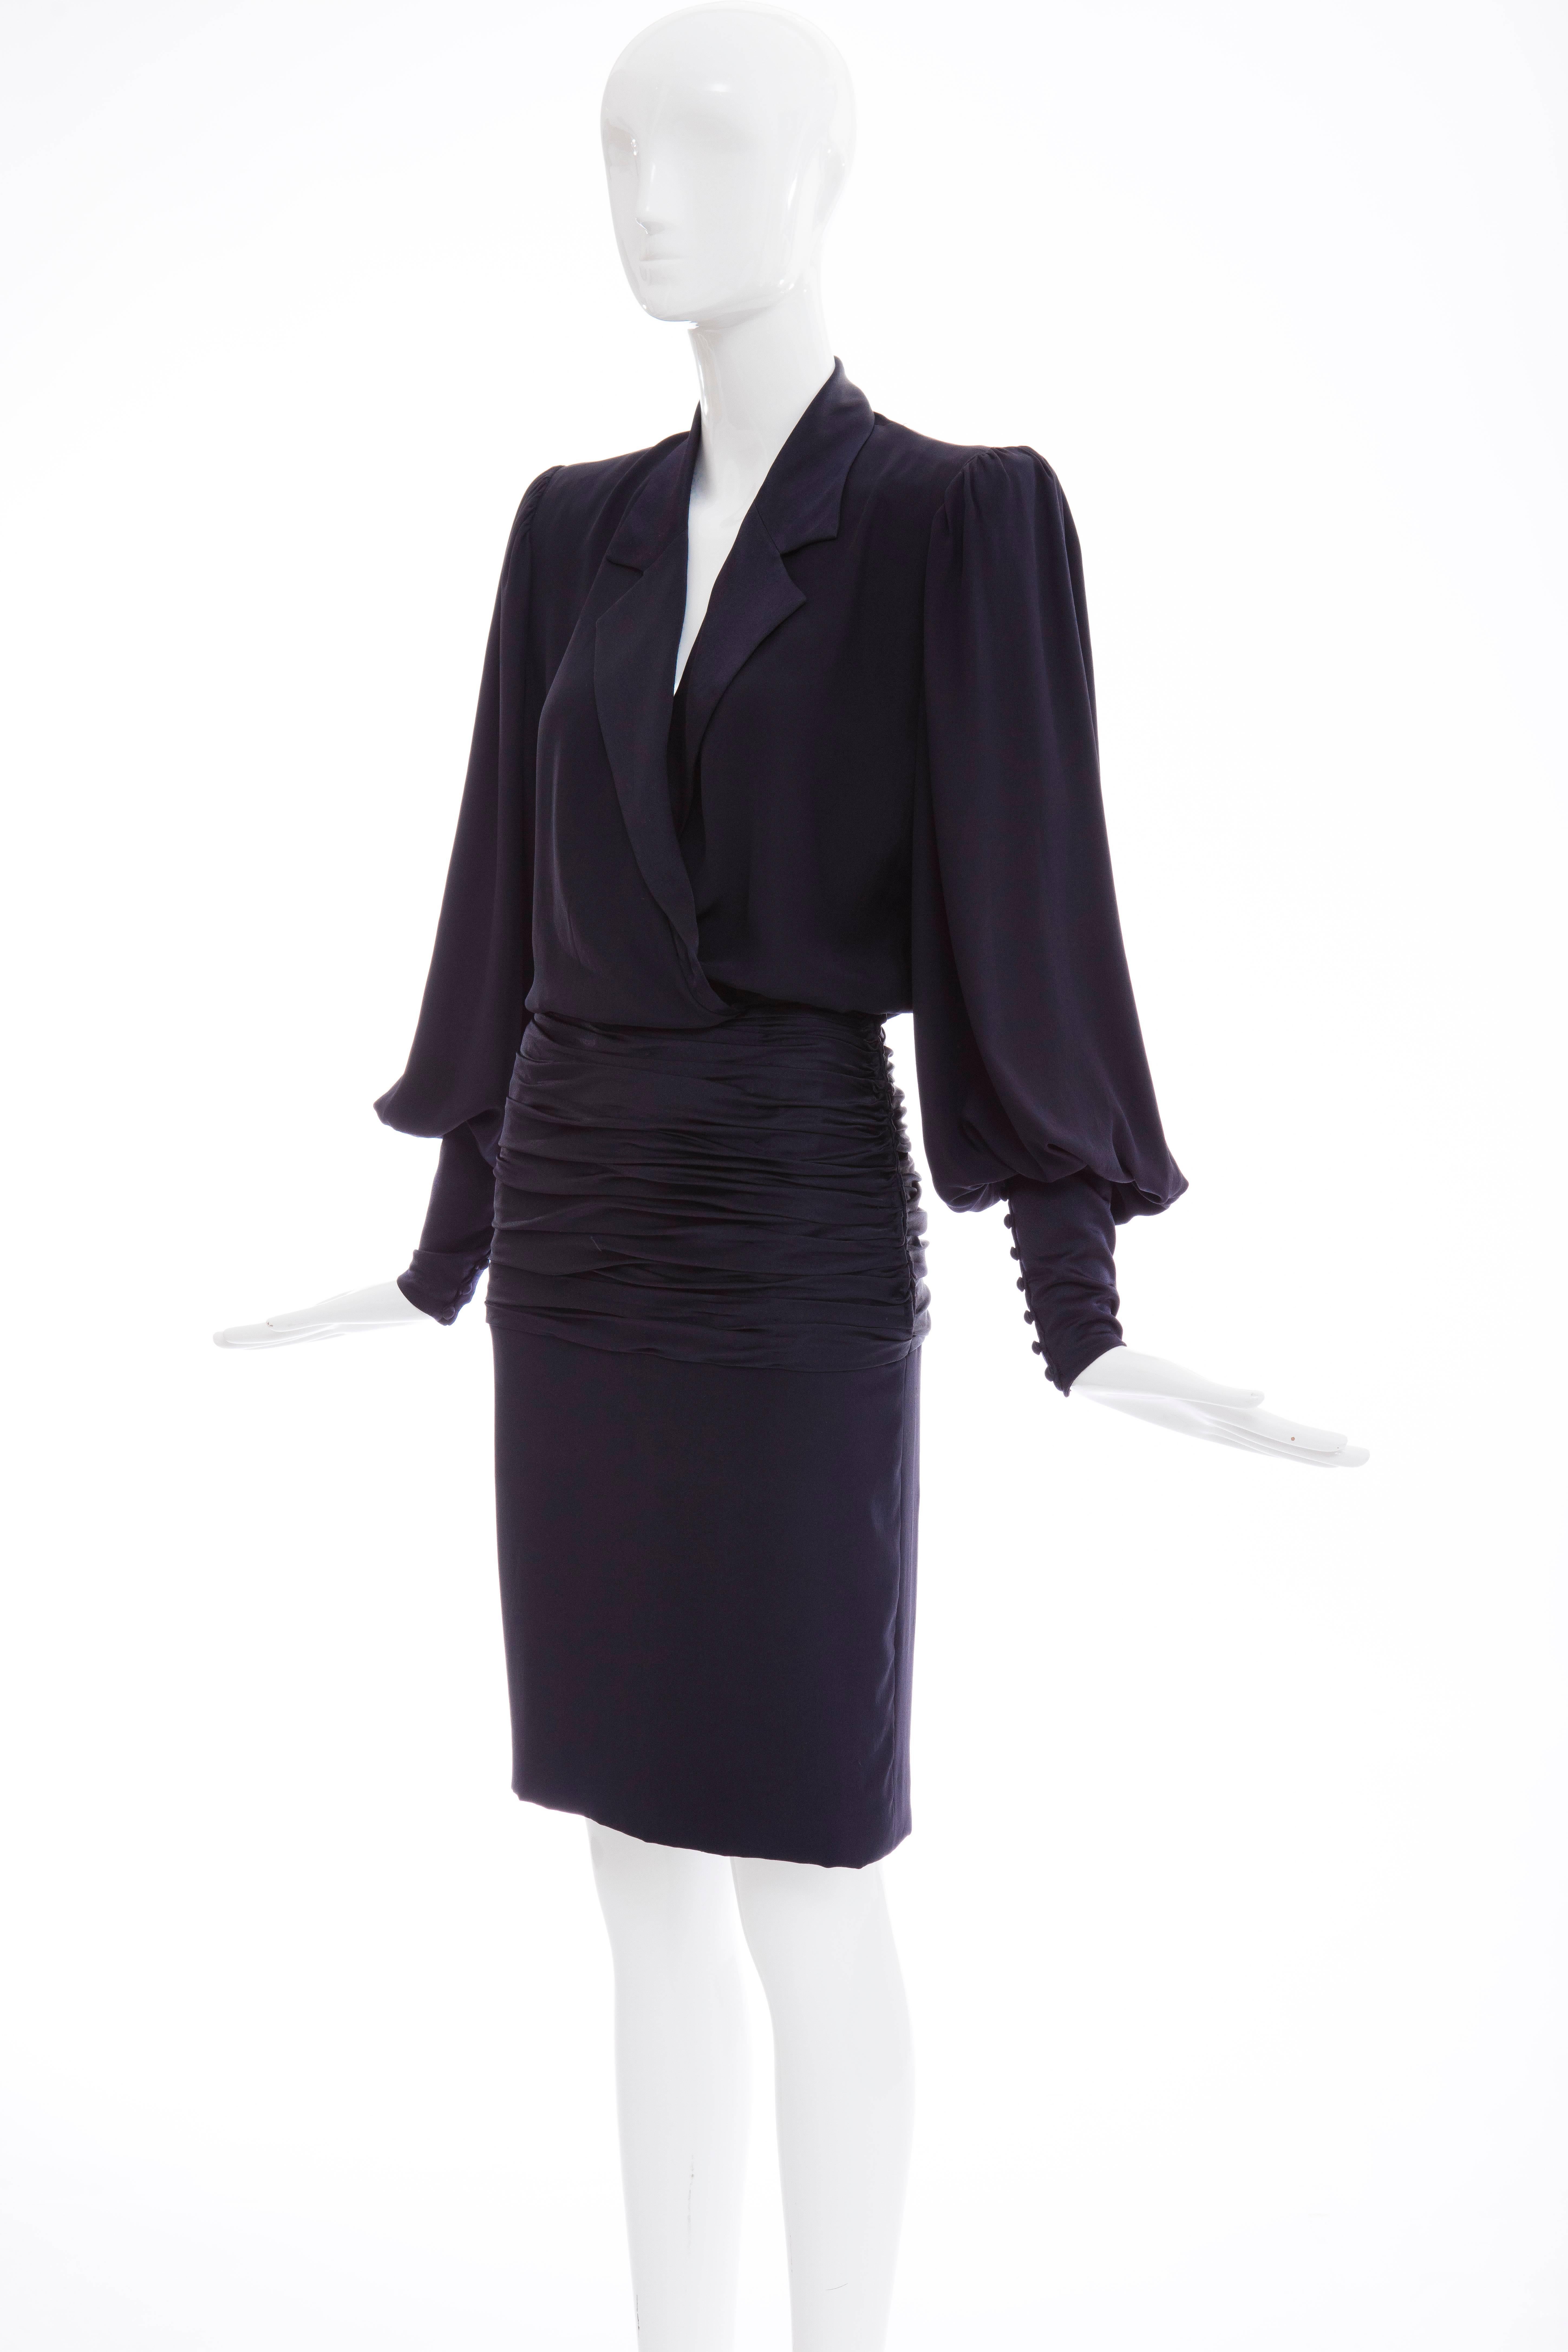 Jean - Louis Scherrer Haute Couture Navy Silk Crepe & Satin Dress, Circa 1980's For Sale 4